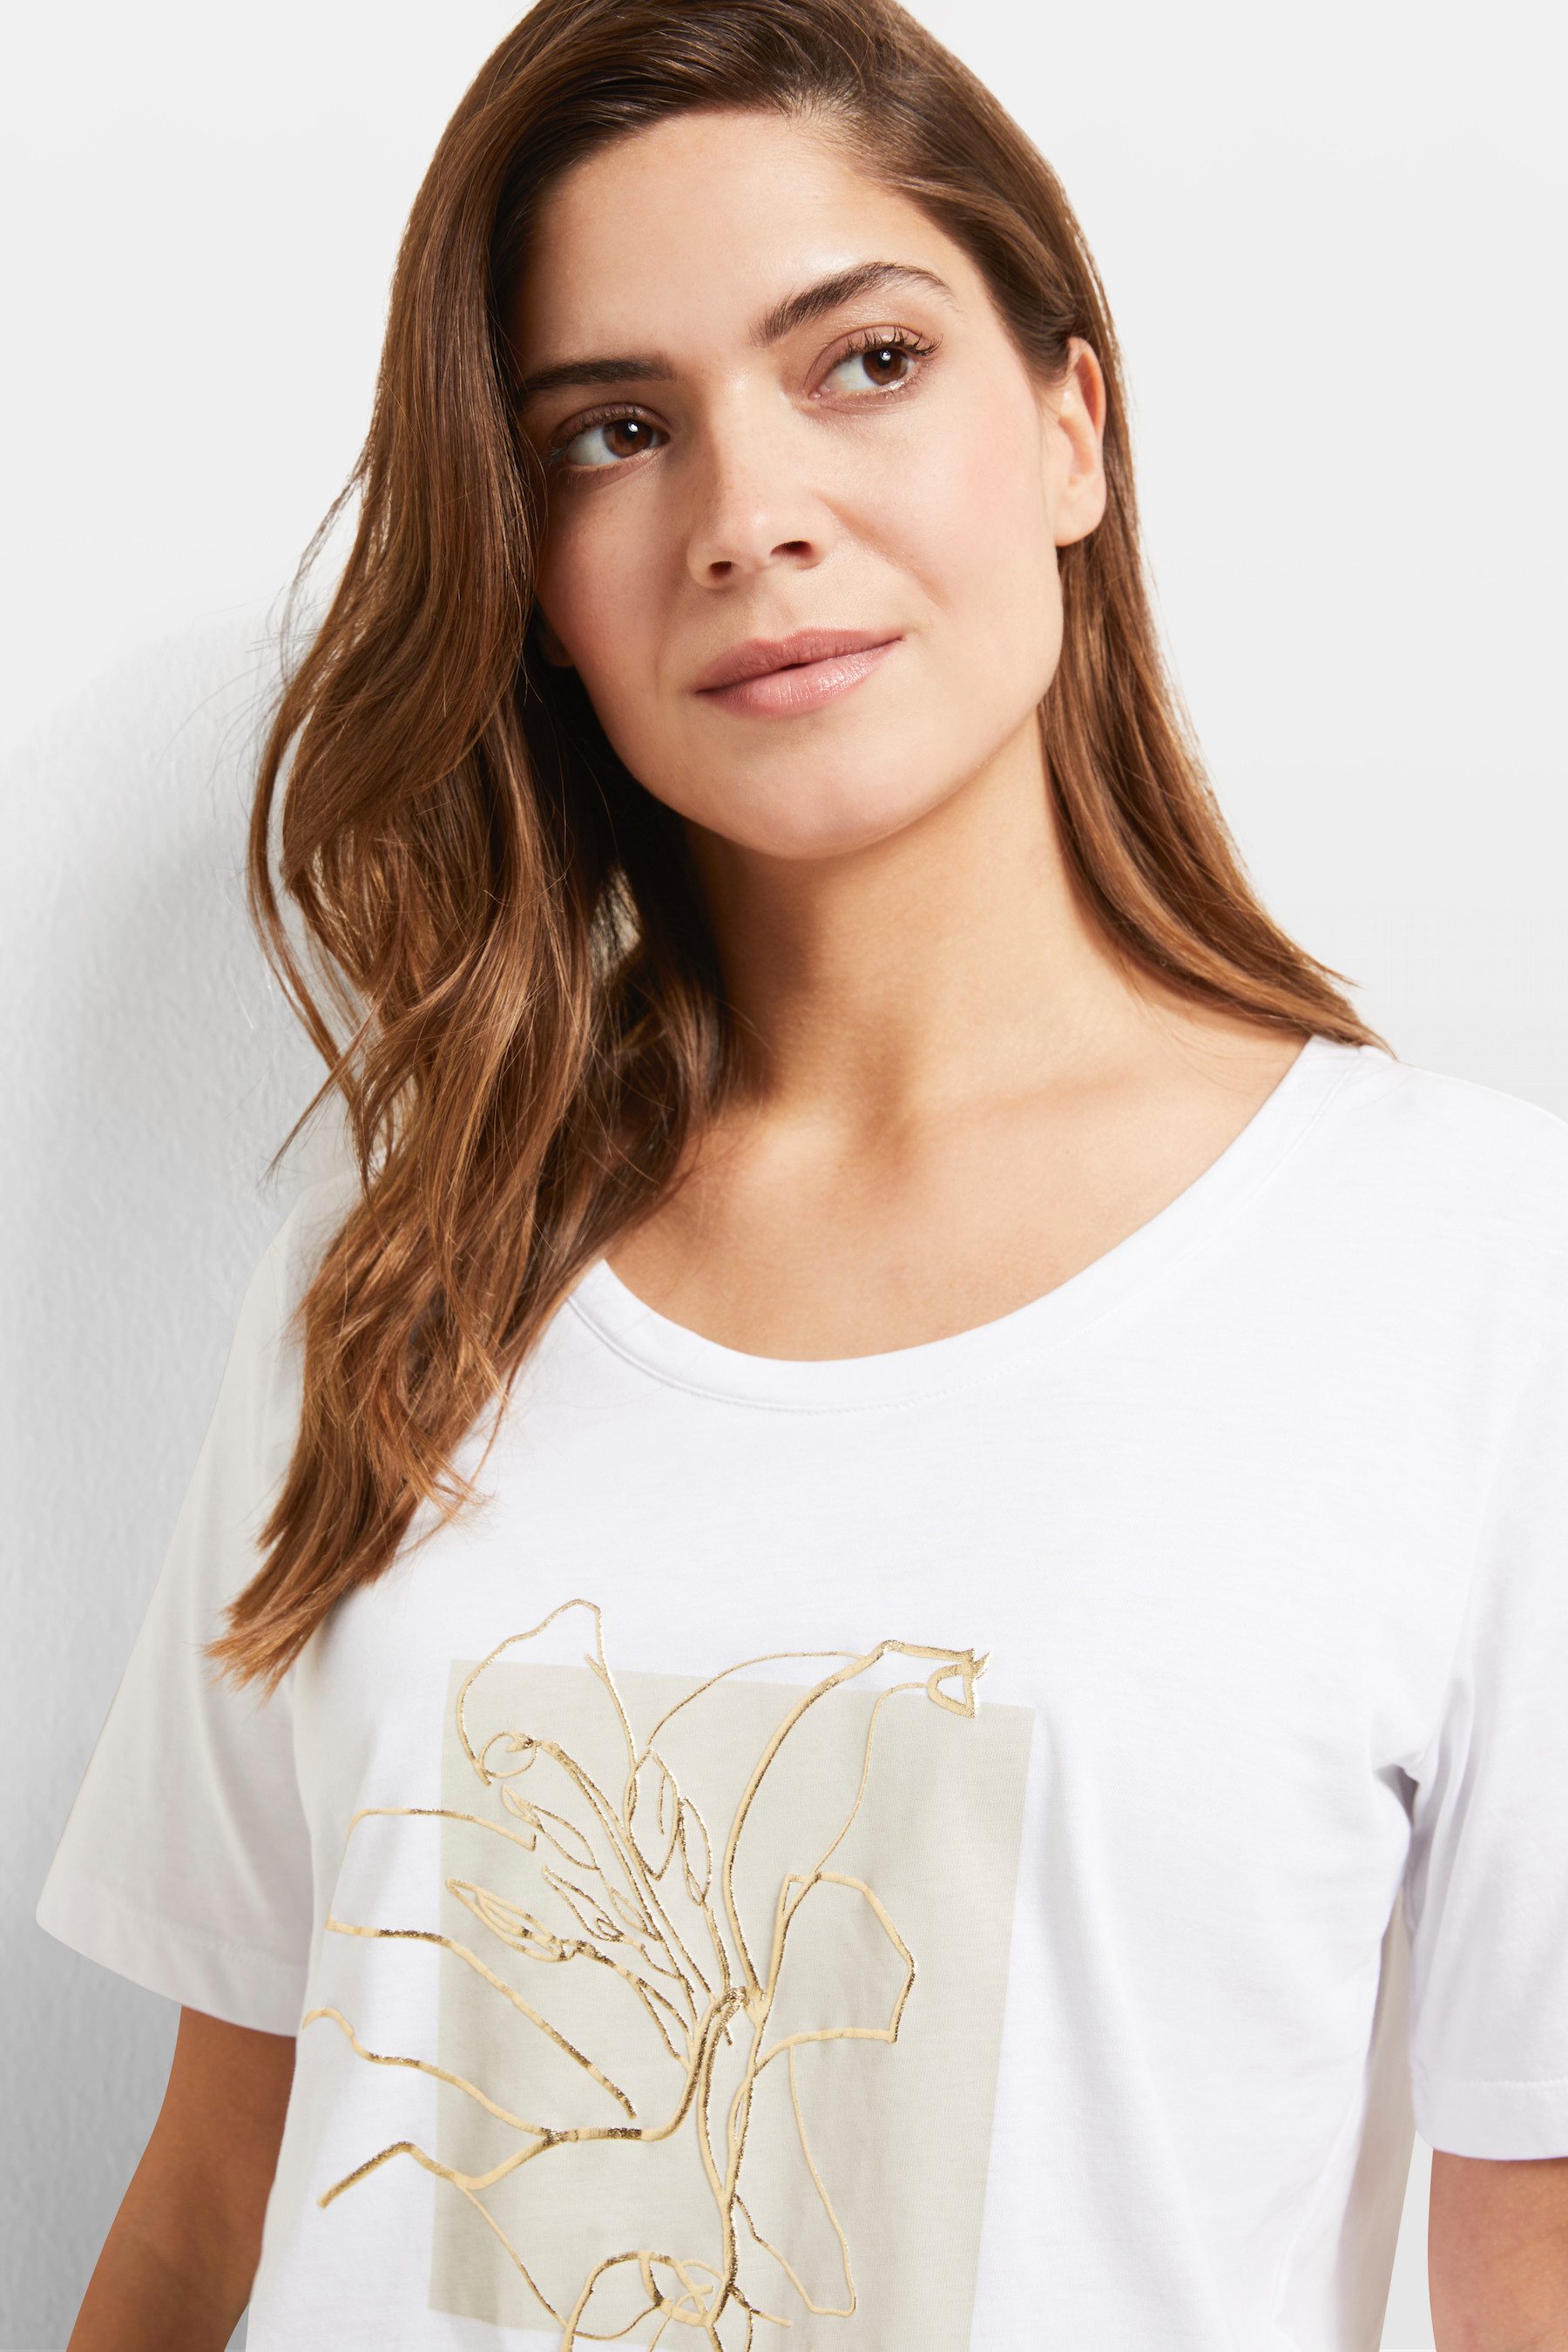 Bugatti T-shirt met bloemenprint